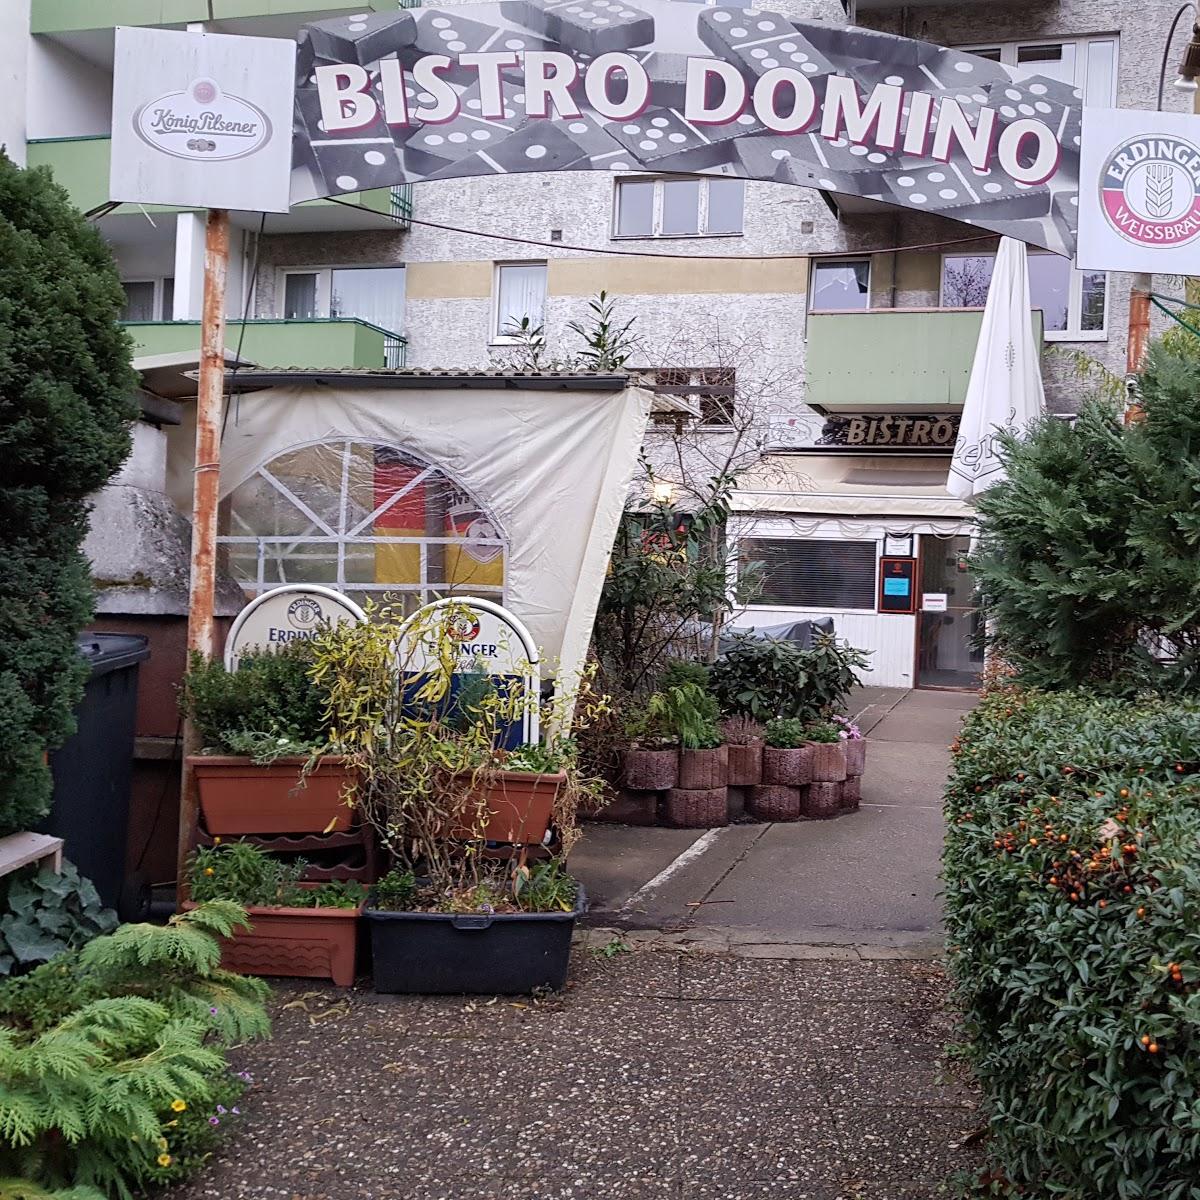 Restaurant "Cafe Bistro Domino" in Berlin